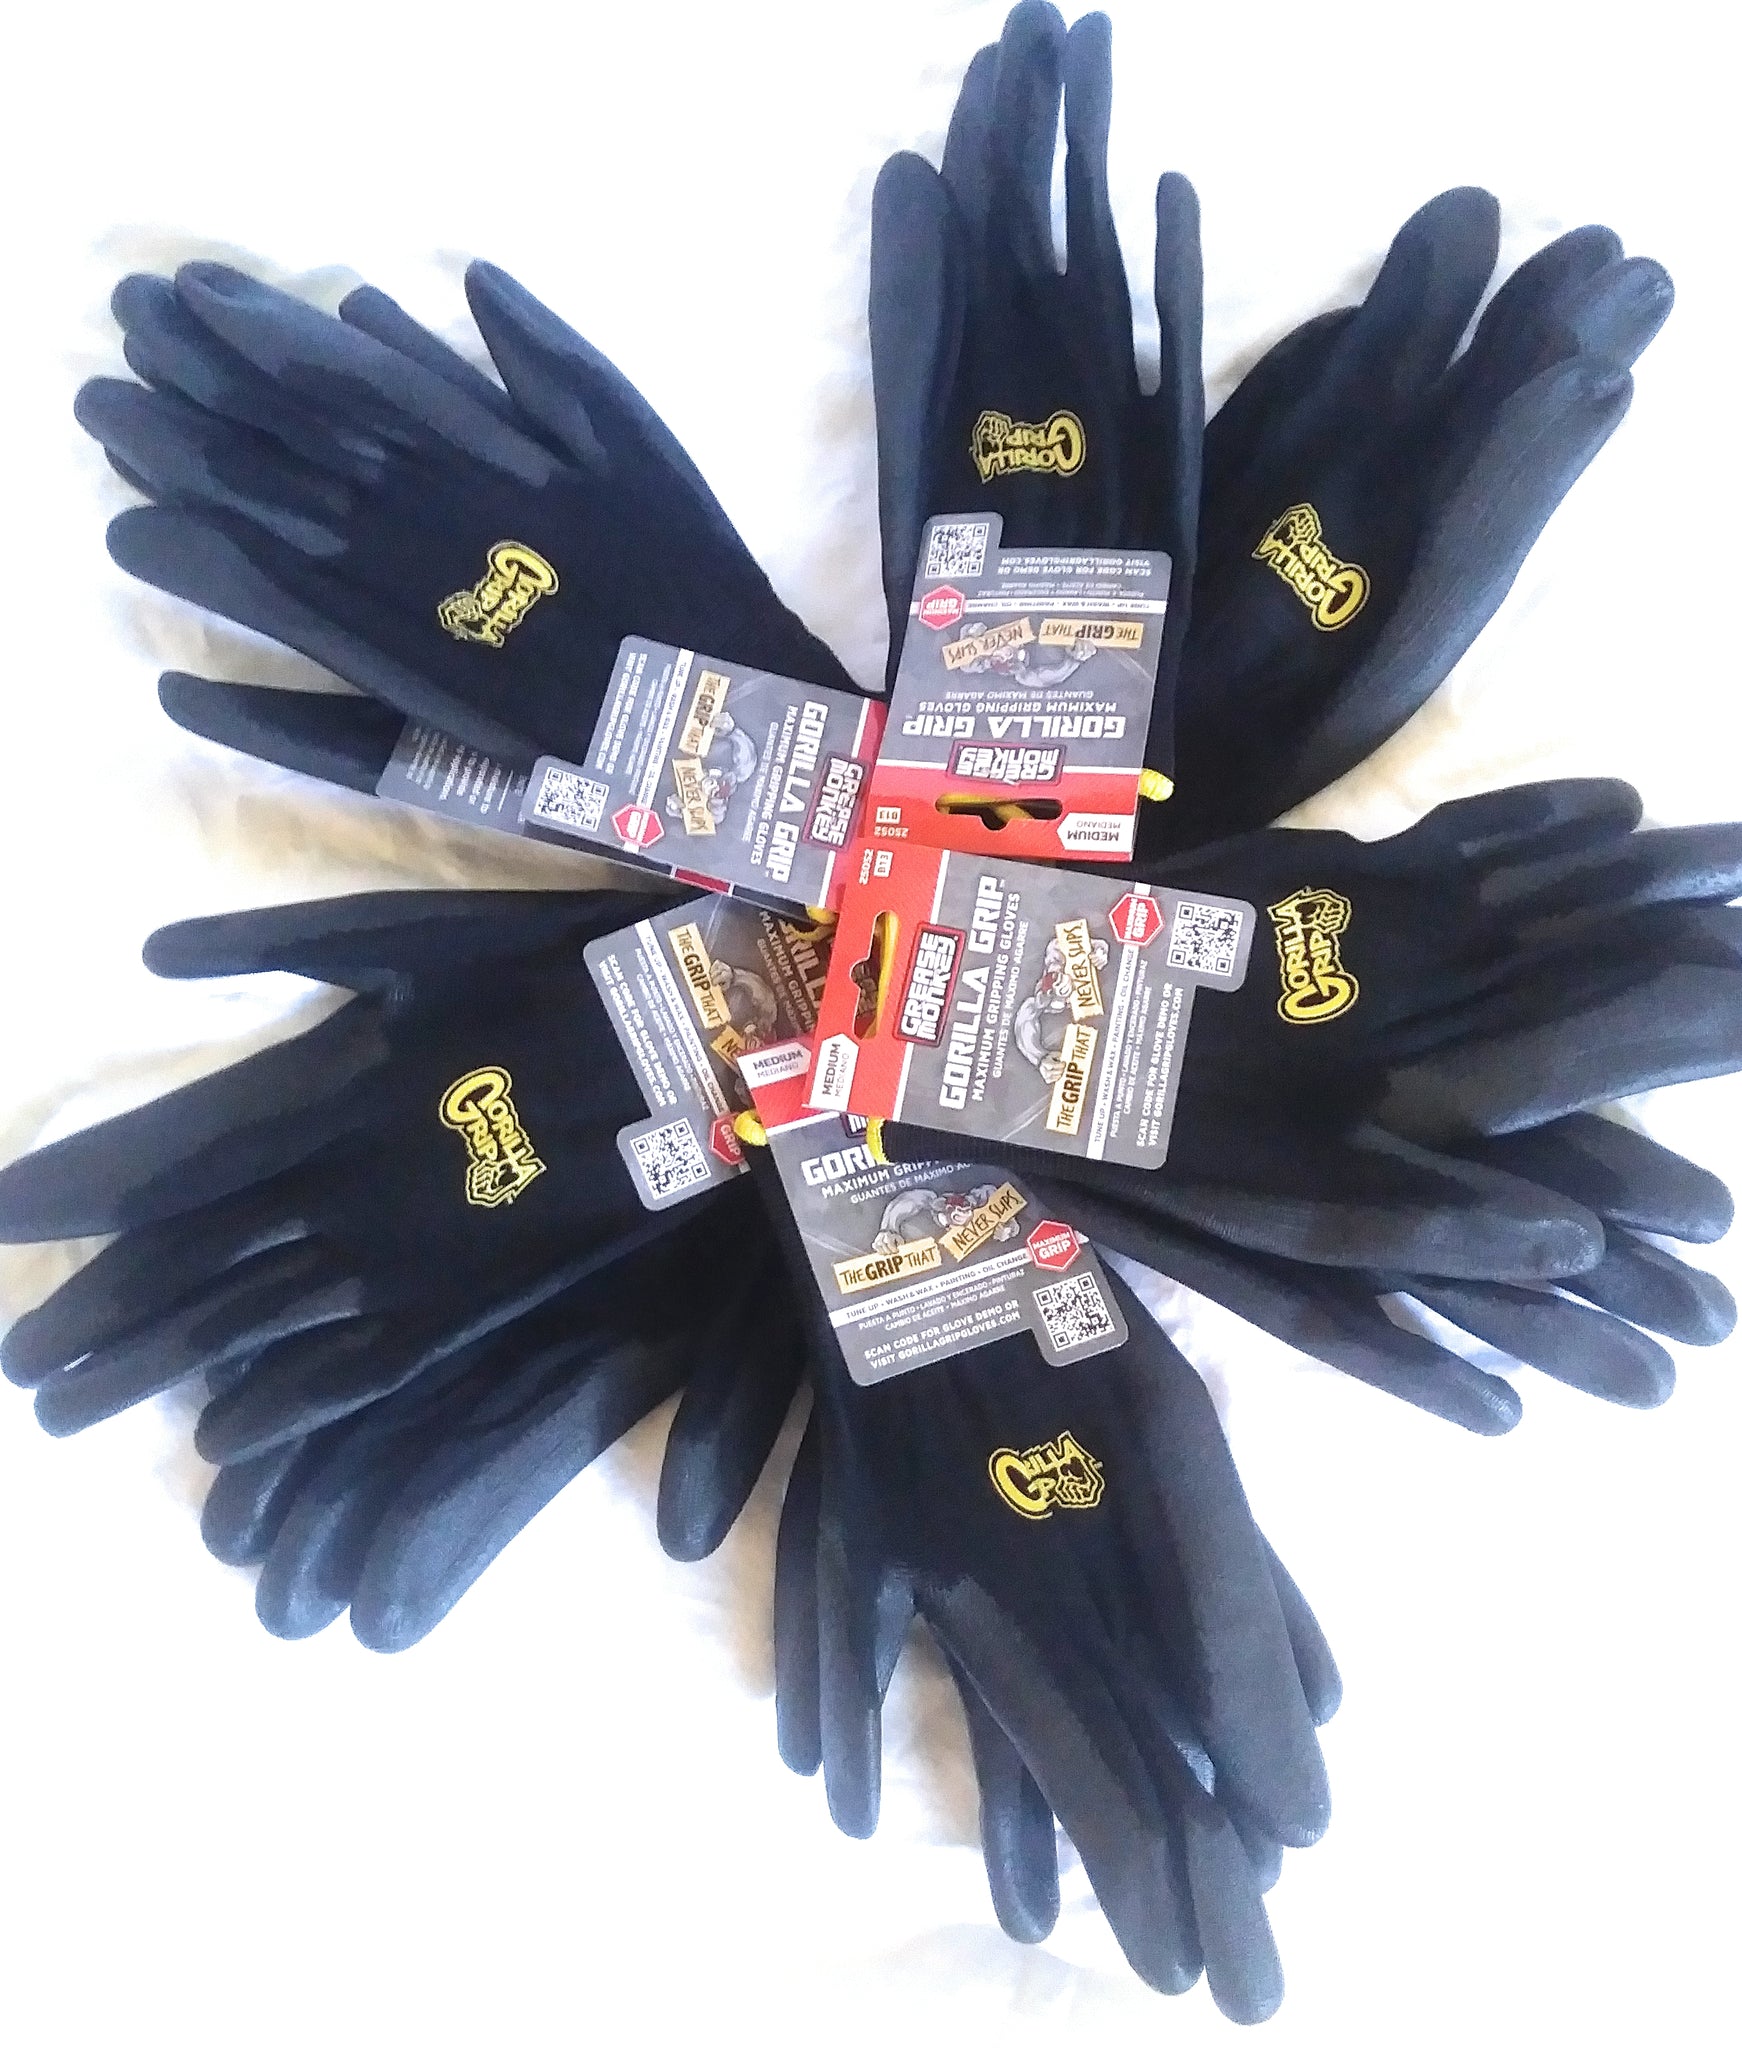 Grease Monkey Gorilla Grip Slip Resistant Gloves 5 Pack, X-Large, 25058-25  